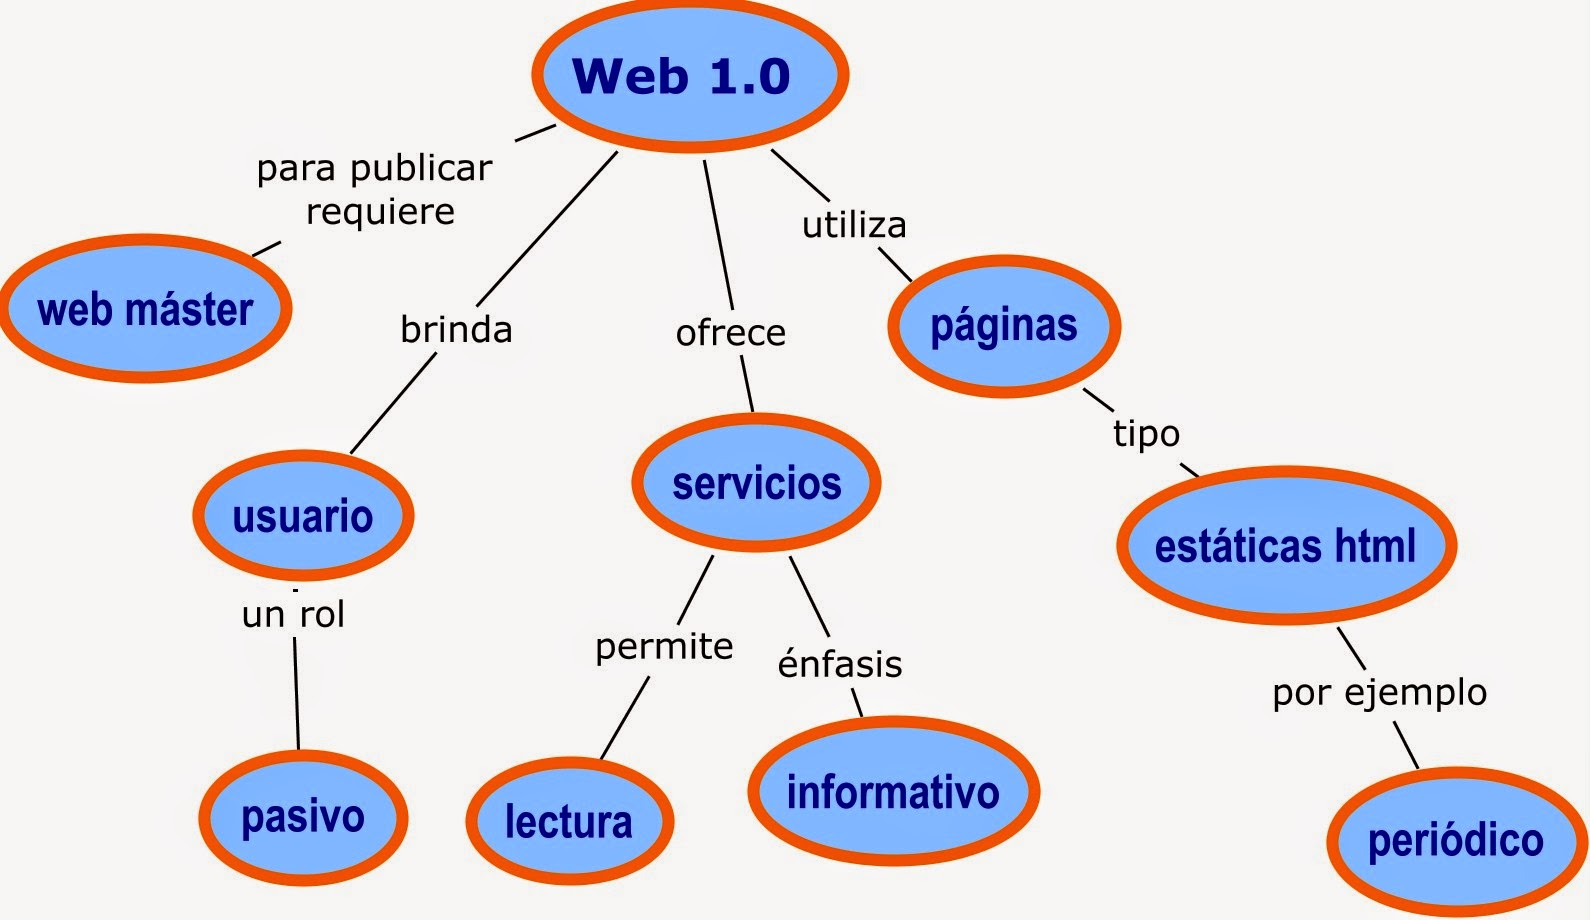 Dkbm web 1.0 policyinfo. Web 1.0 примеры. Web 1.0 дизайн. Web 1.0 web 2.0 web 3.0. Web 01.